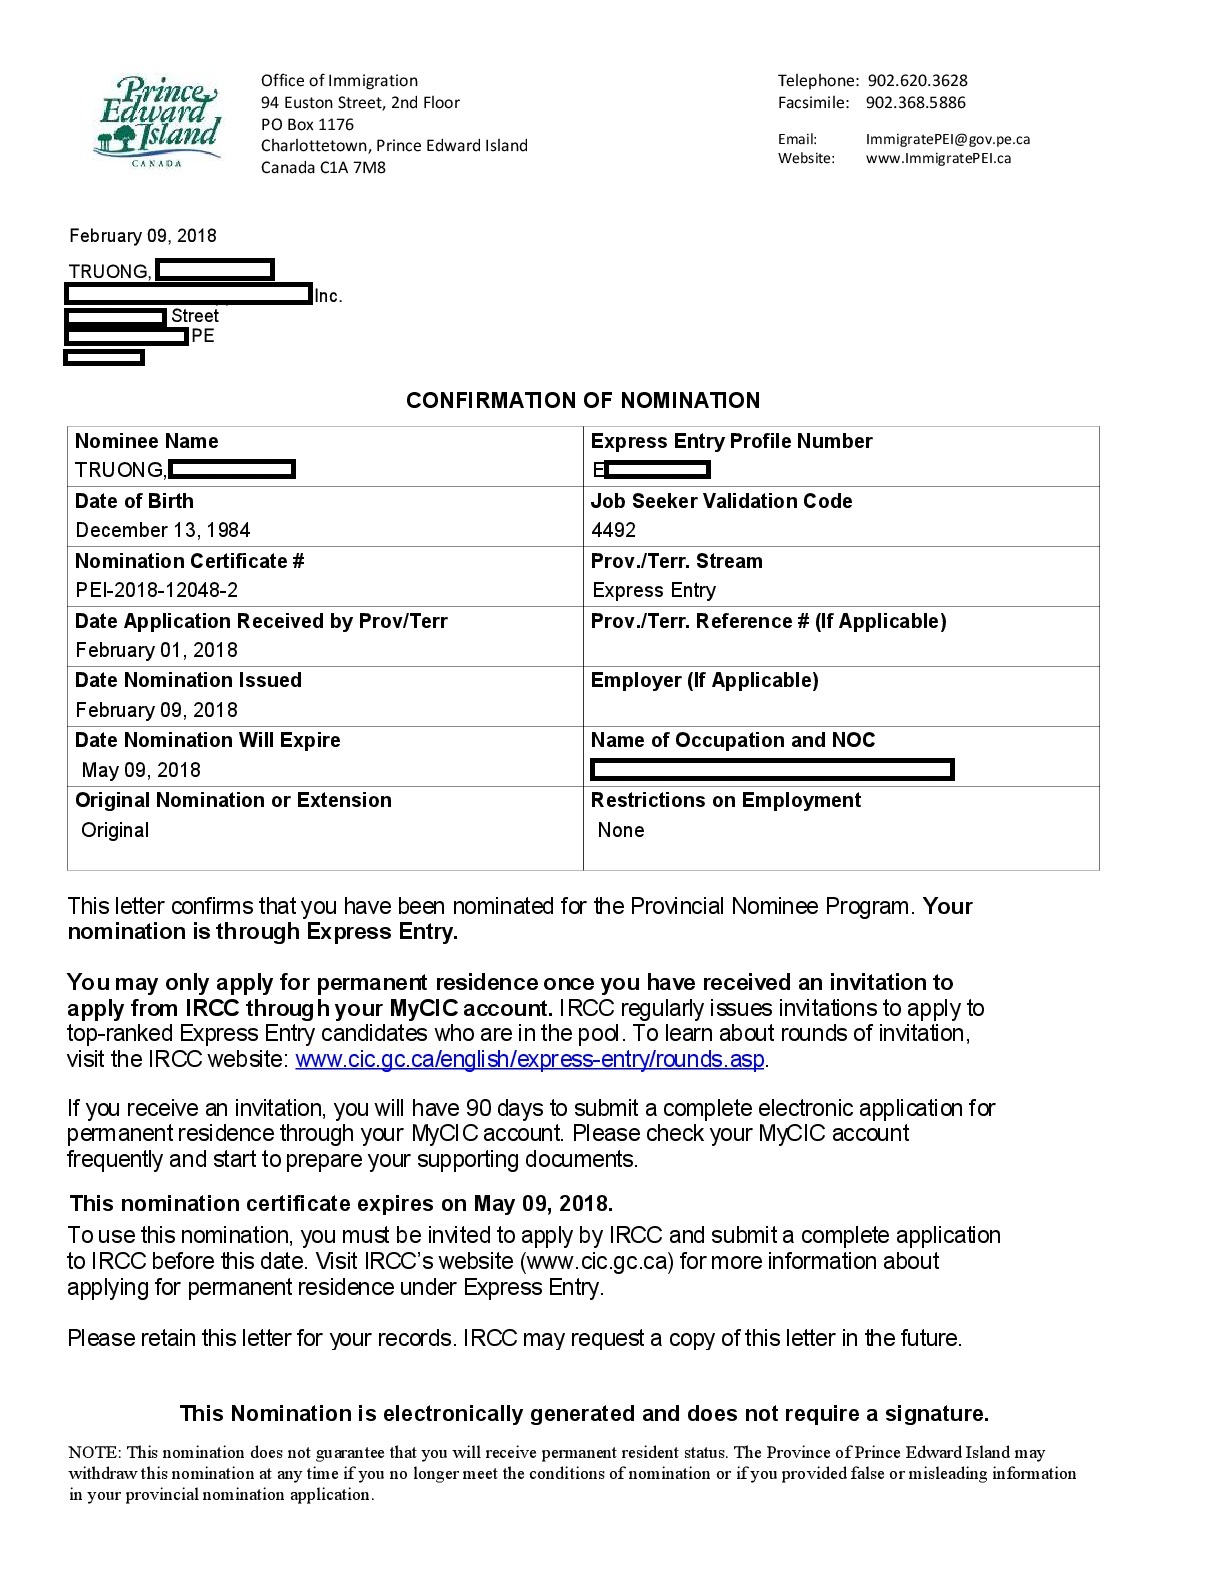 Nomination_Certificate2015Express-001.jpg (434 KB)